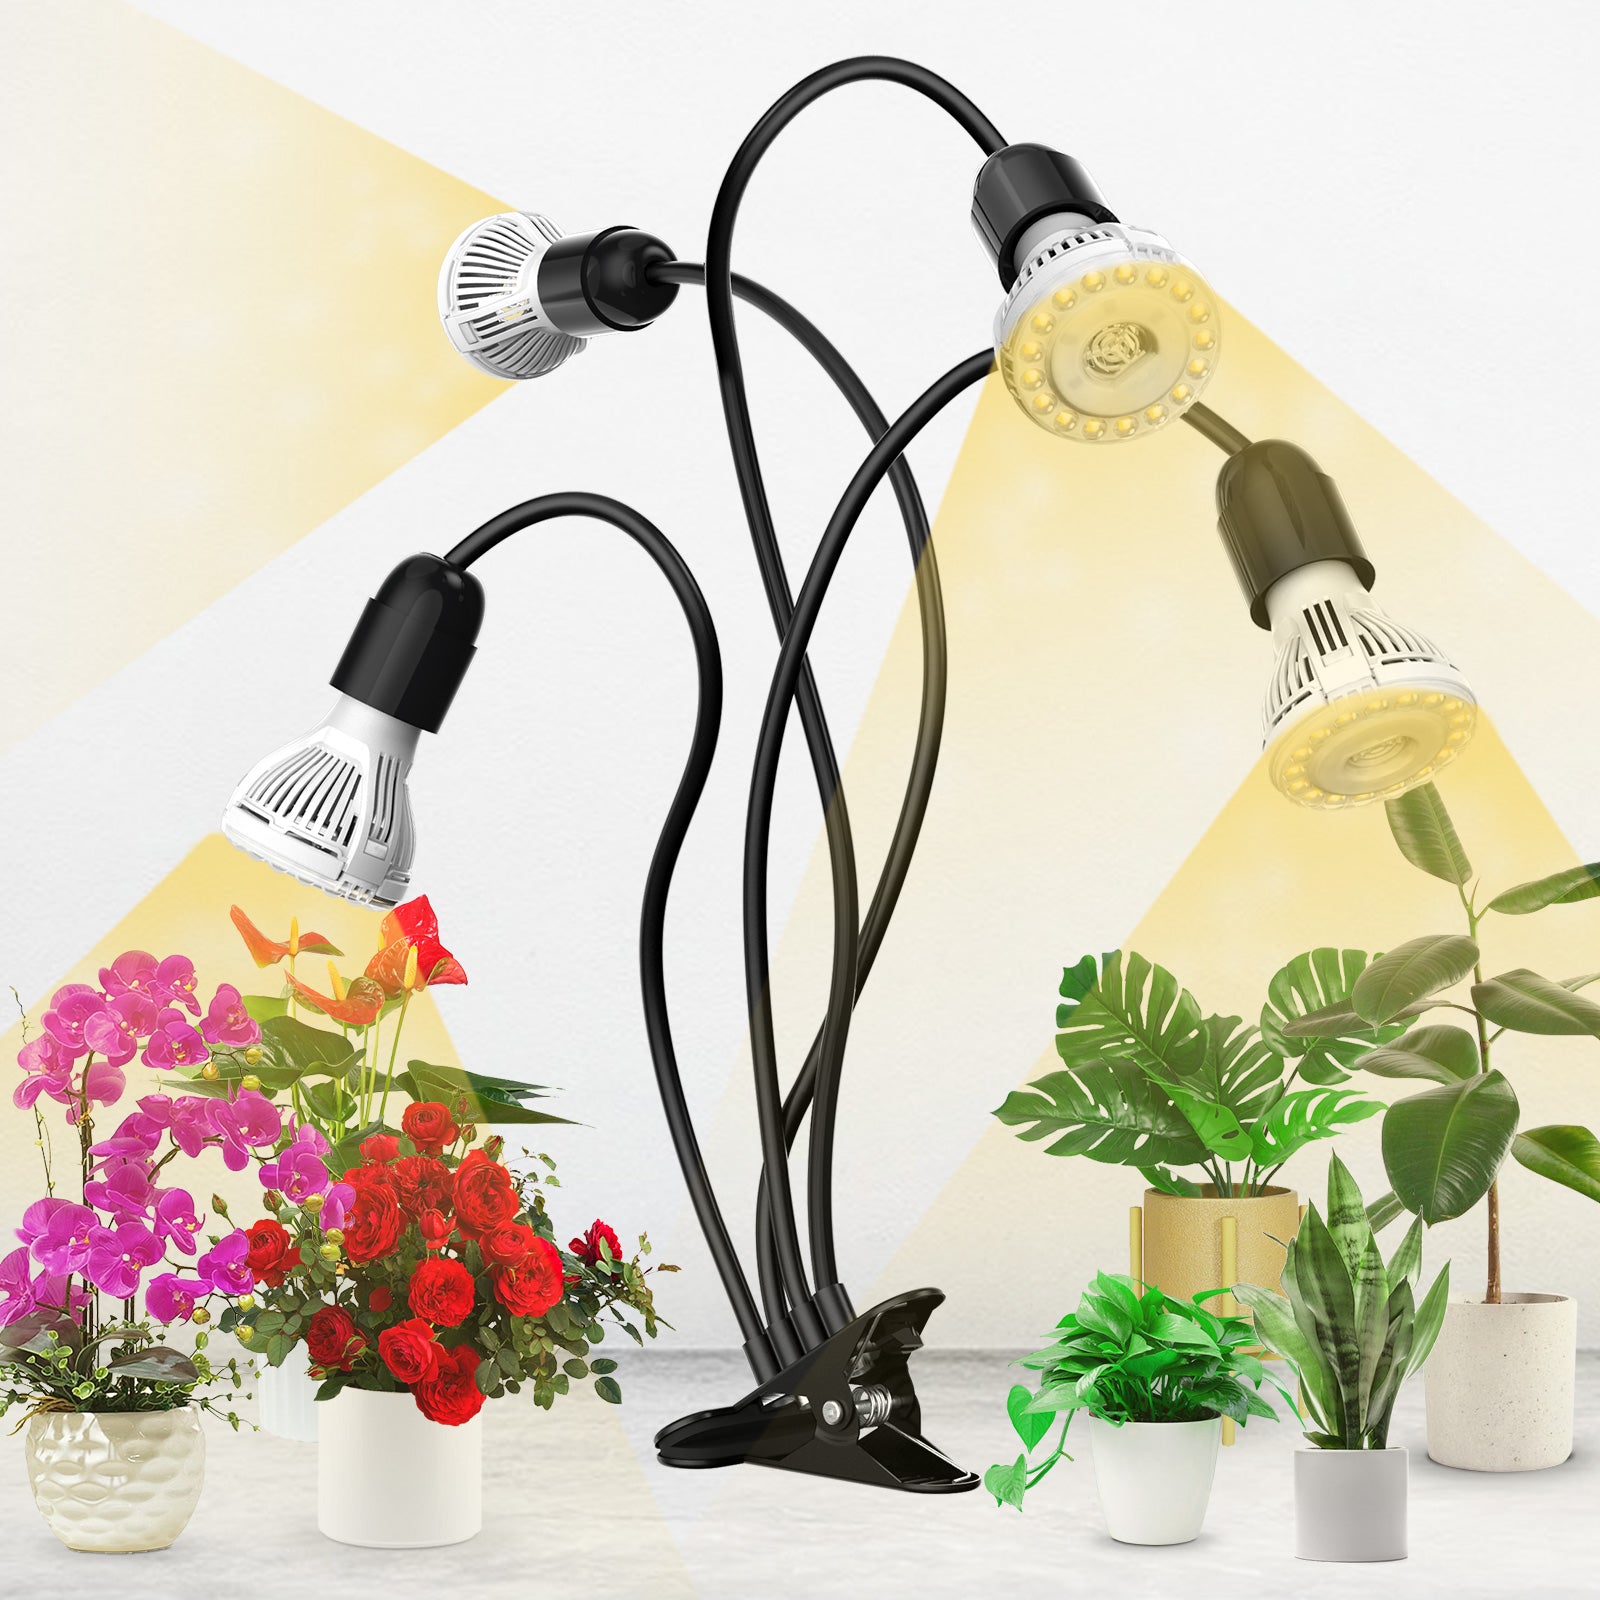 40W Adjustable 4-Head Clip-on LED Grow Light (US ONLY)(Black Version)